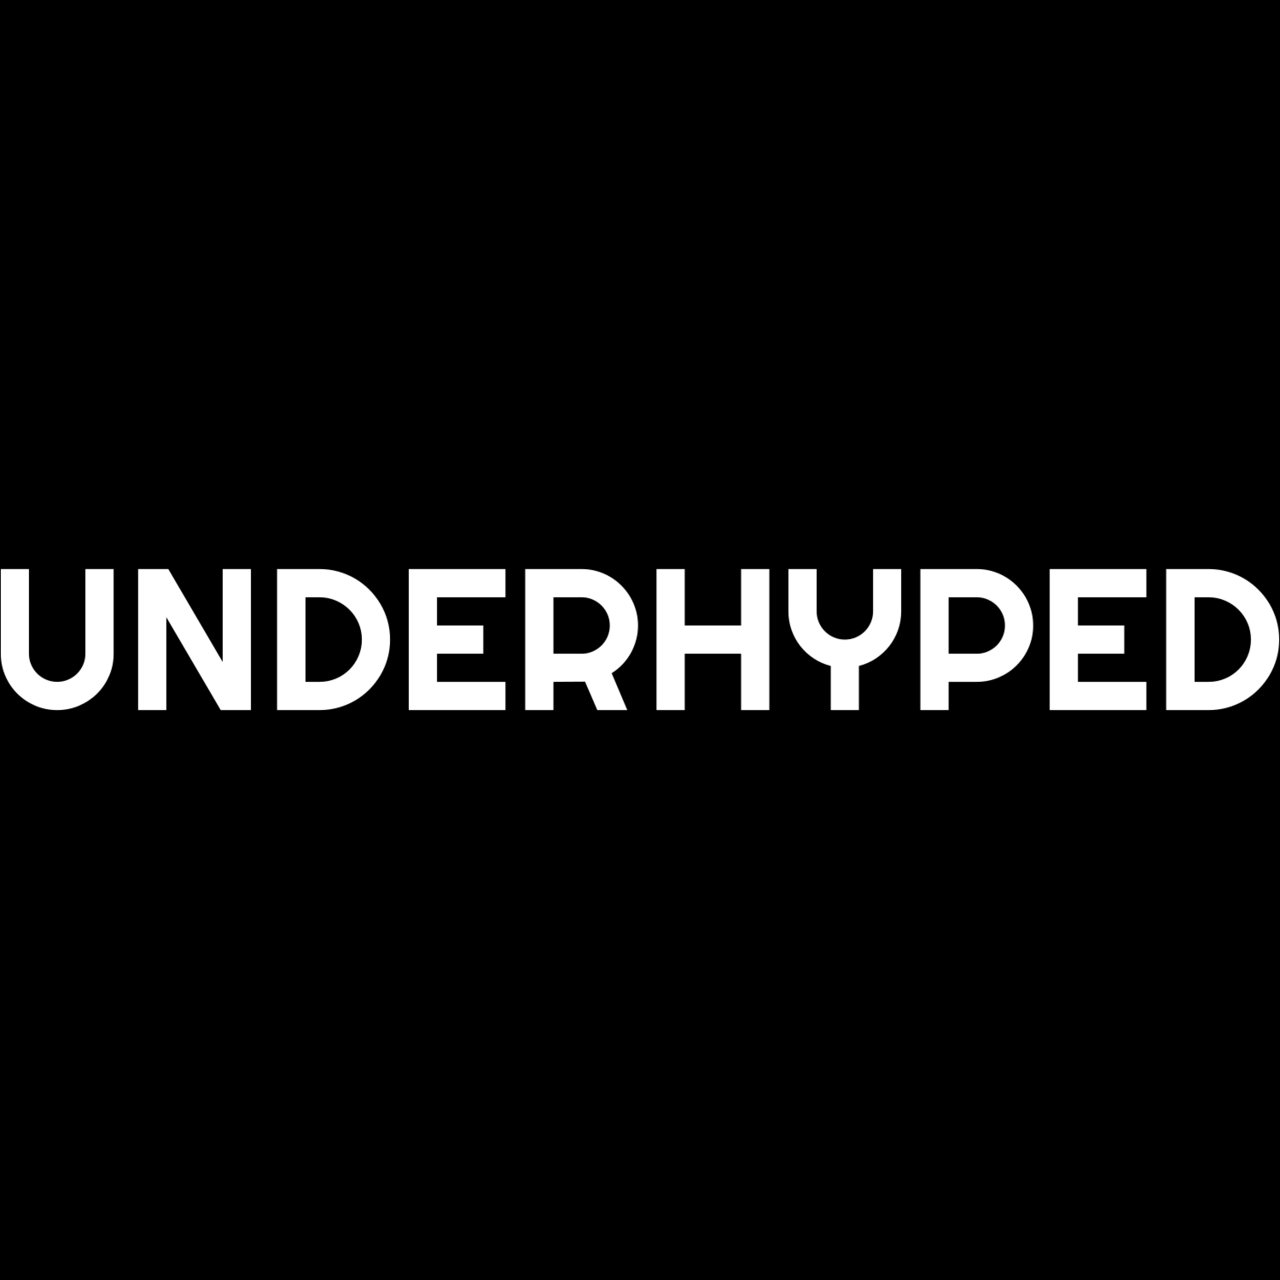 Underhyped